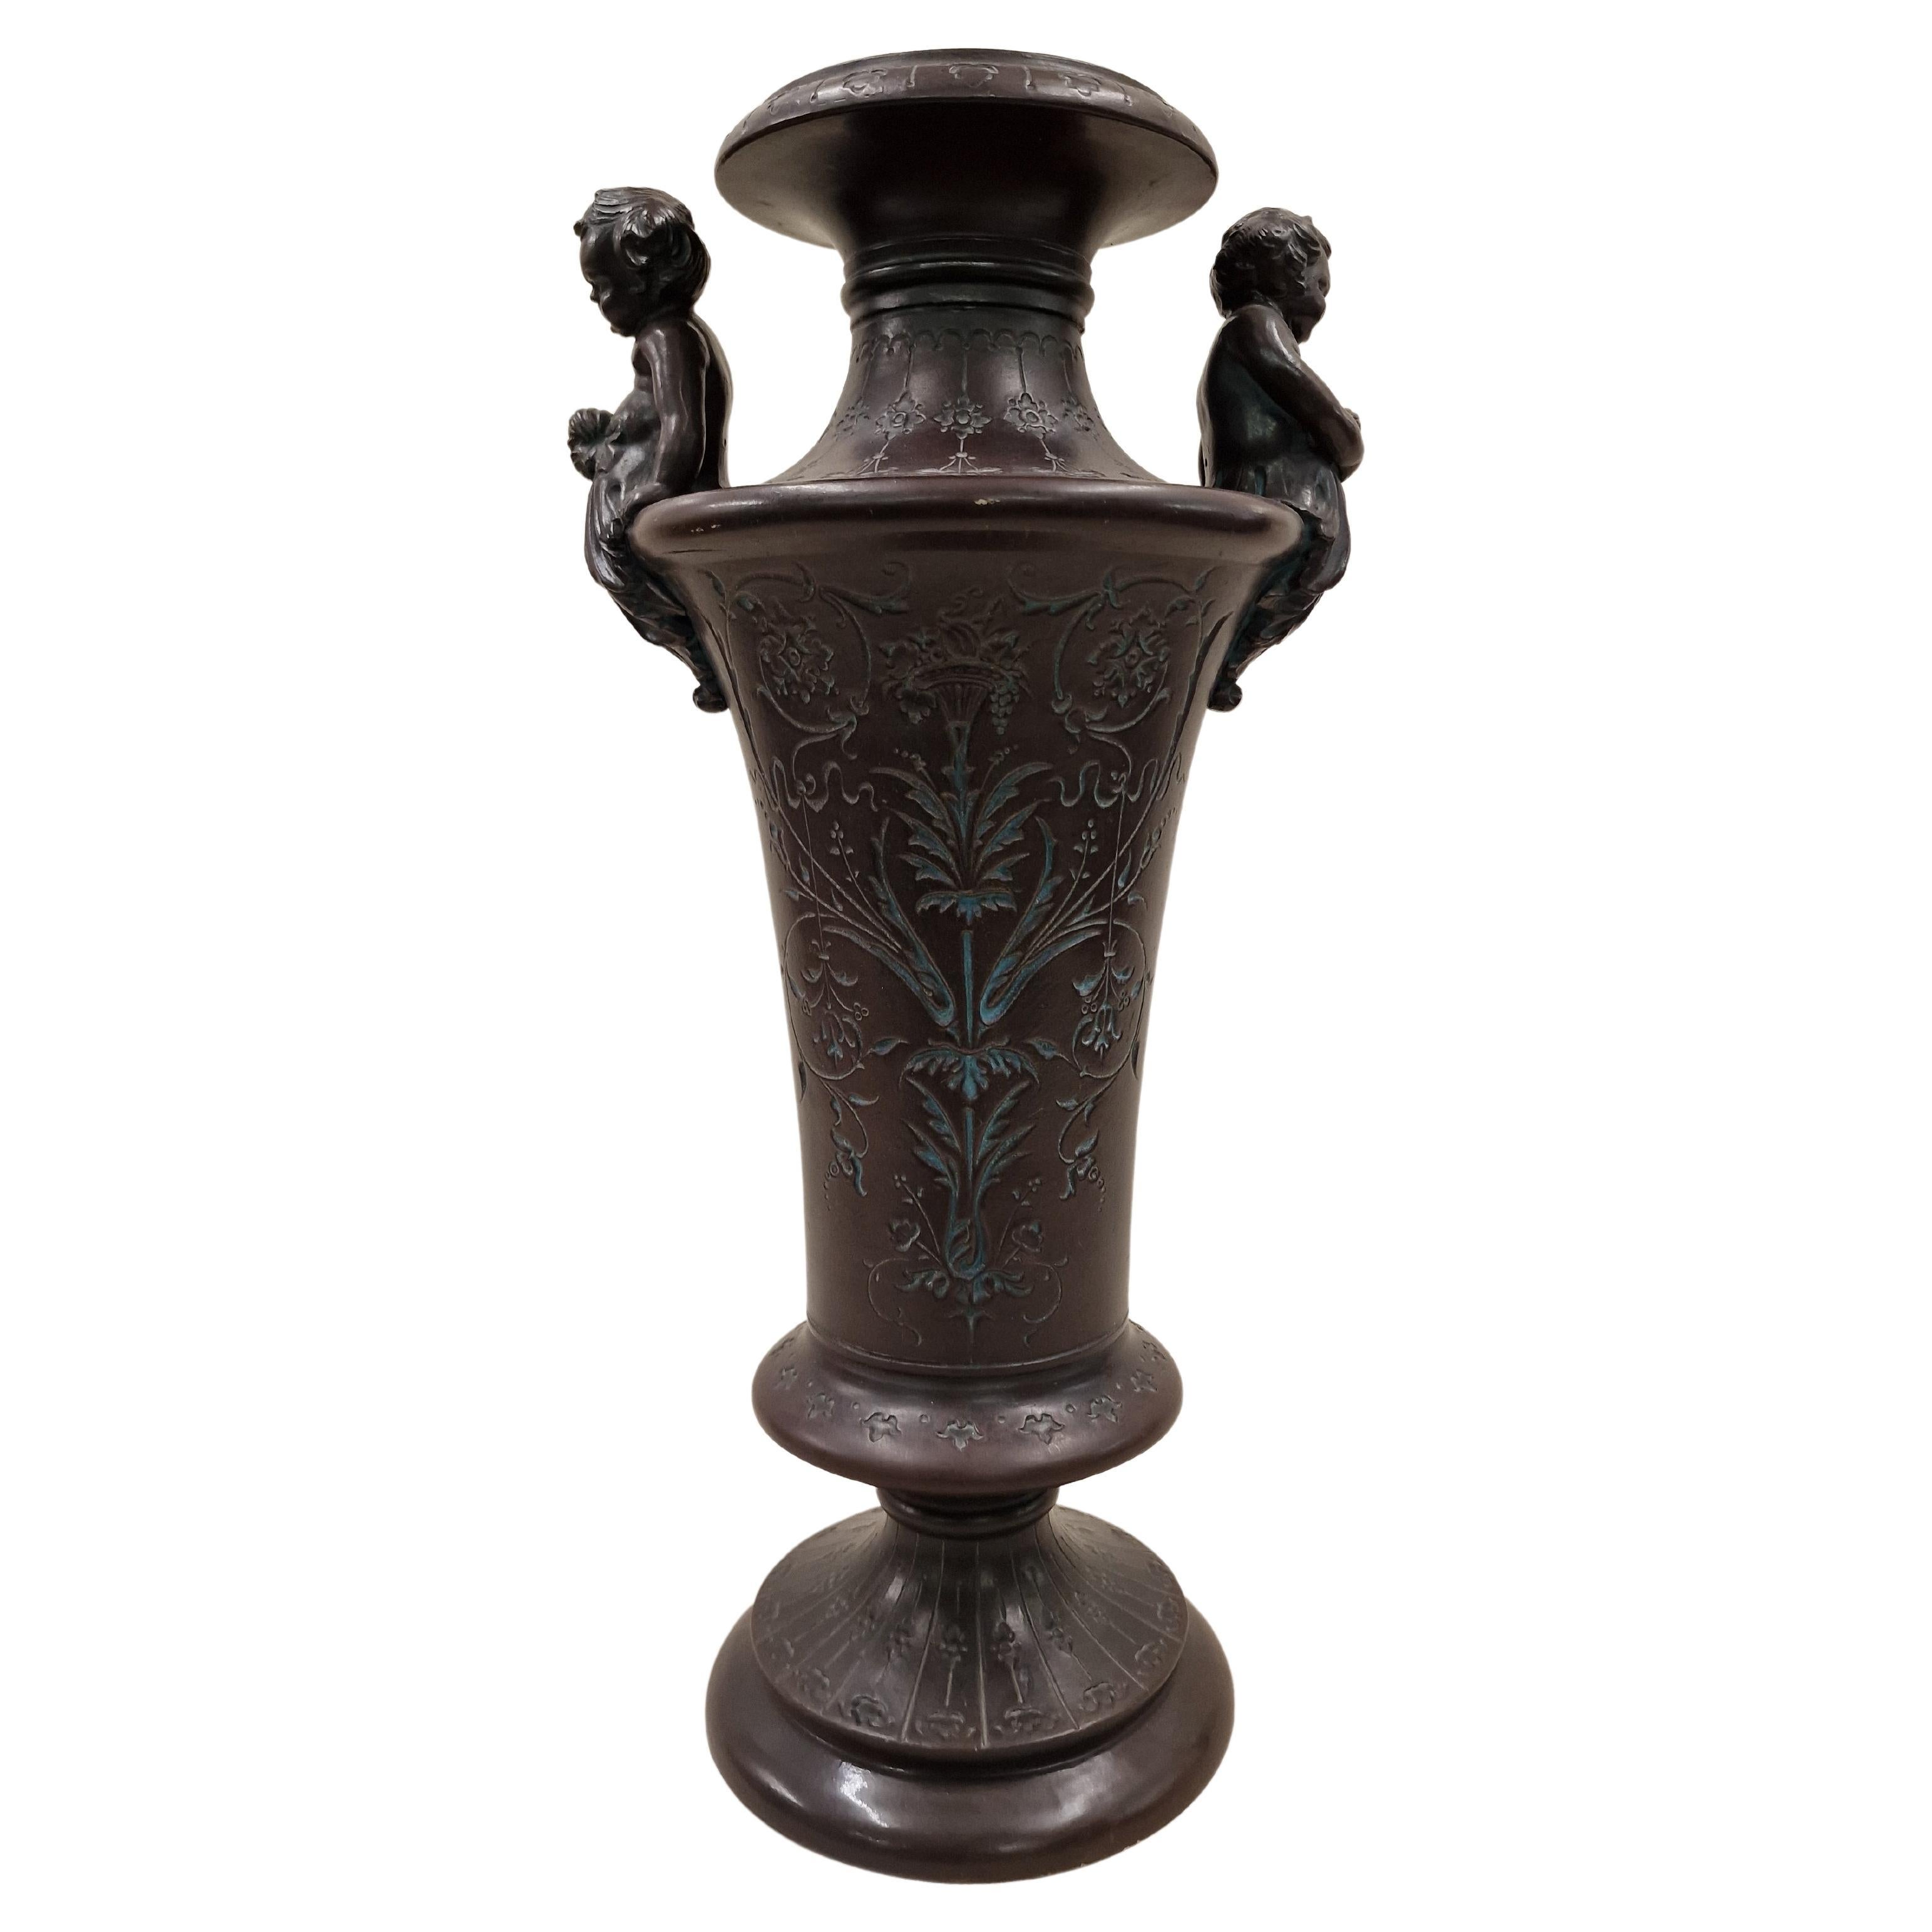 Huge Amphore, Vase, Ceramic/Majolica, Bernhard Bloch, 1890, Historicism, Bohemia